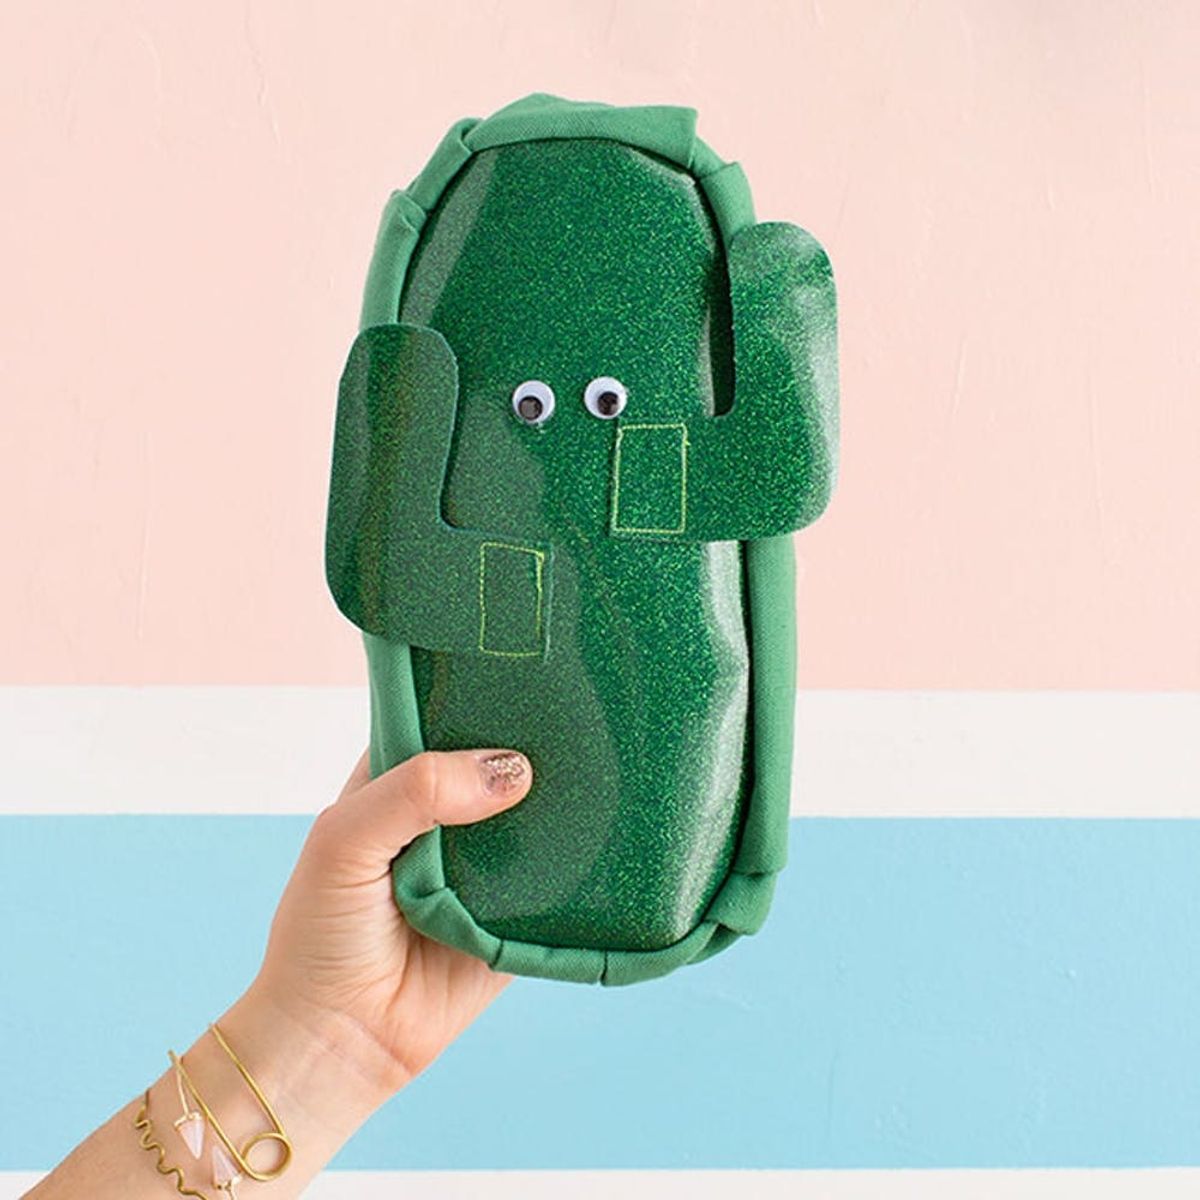 $10 DIY Project: How to Make a Cute AF Cactus Makeup Bag